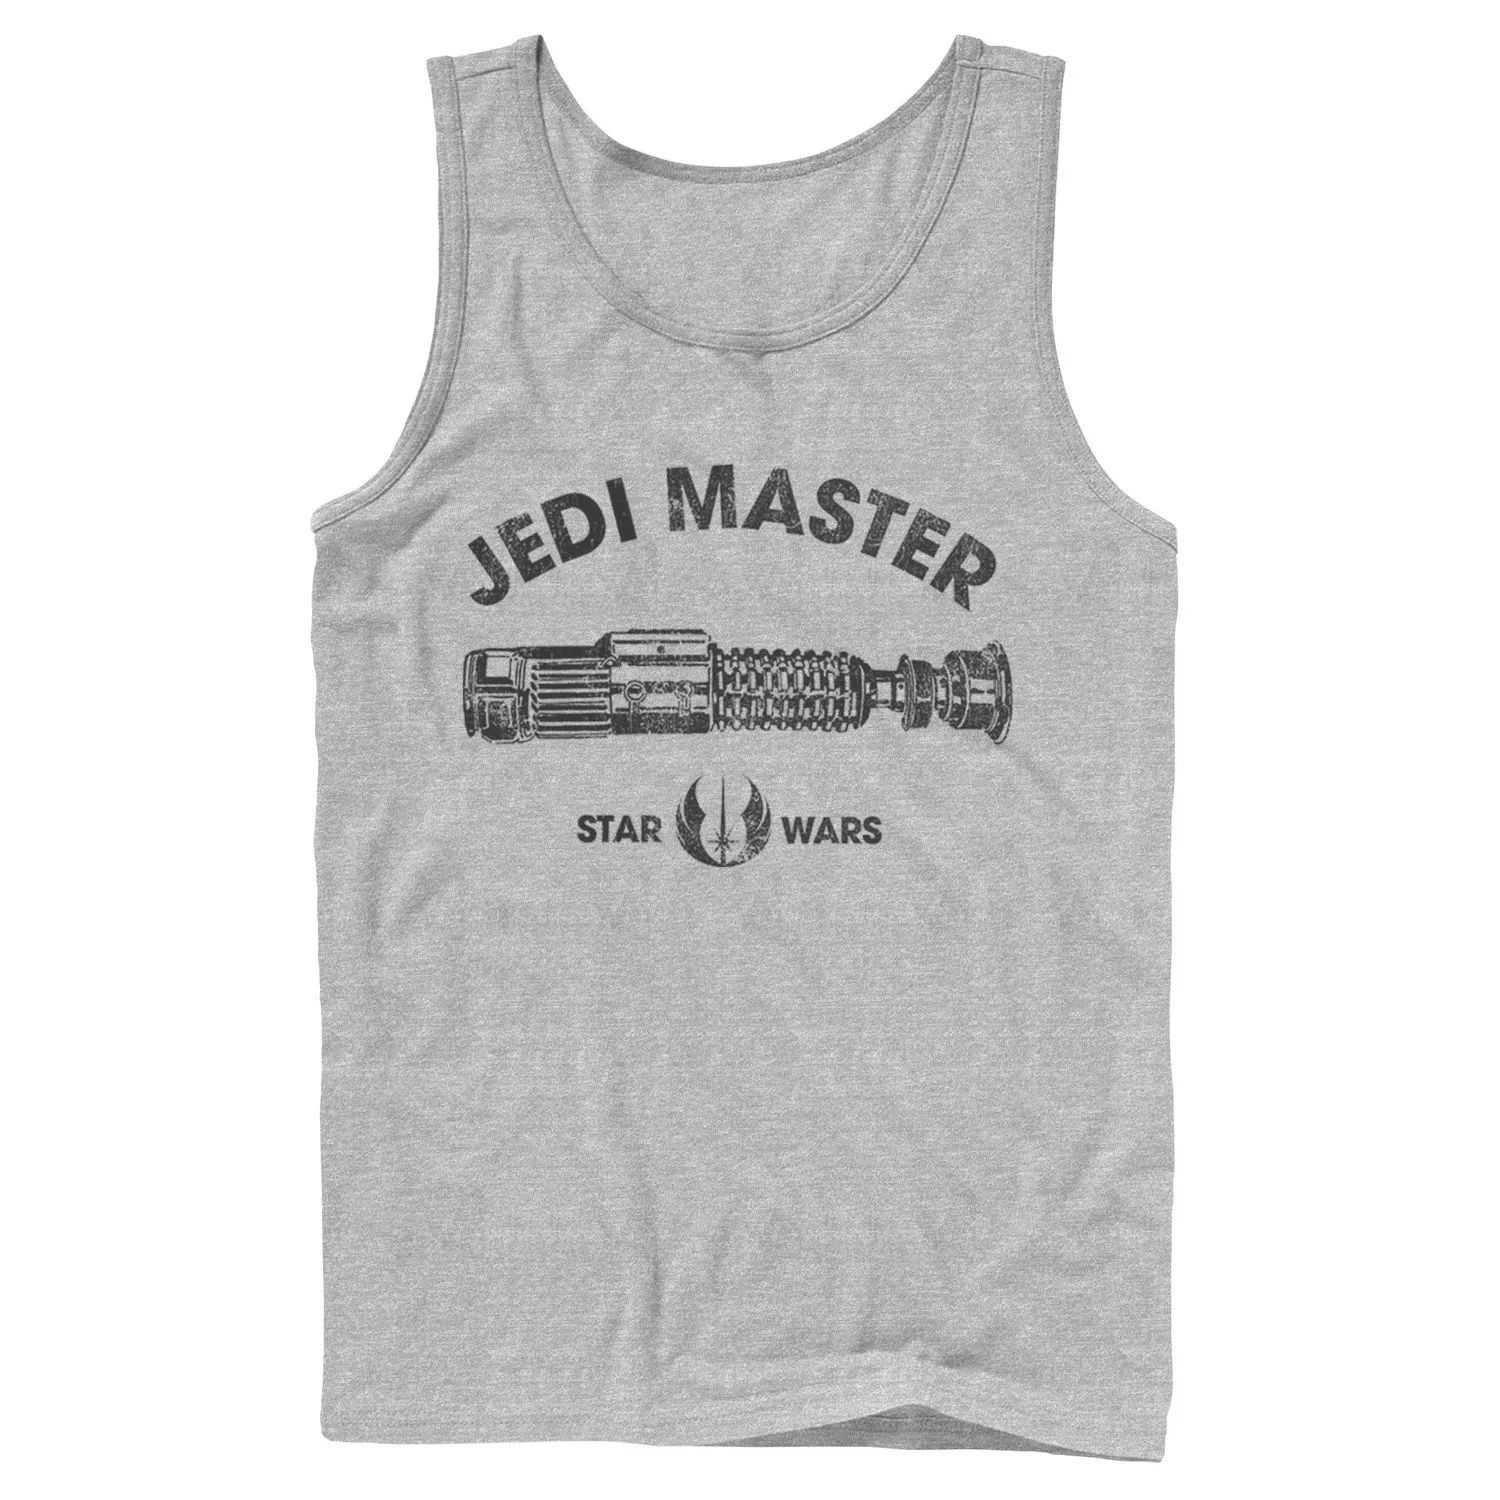 Мужская майка с логотипом Star Wars Jedi Master Lightsaber original star wars jedi lightsaber diversification diversified assembly hasbro c2119